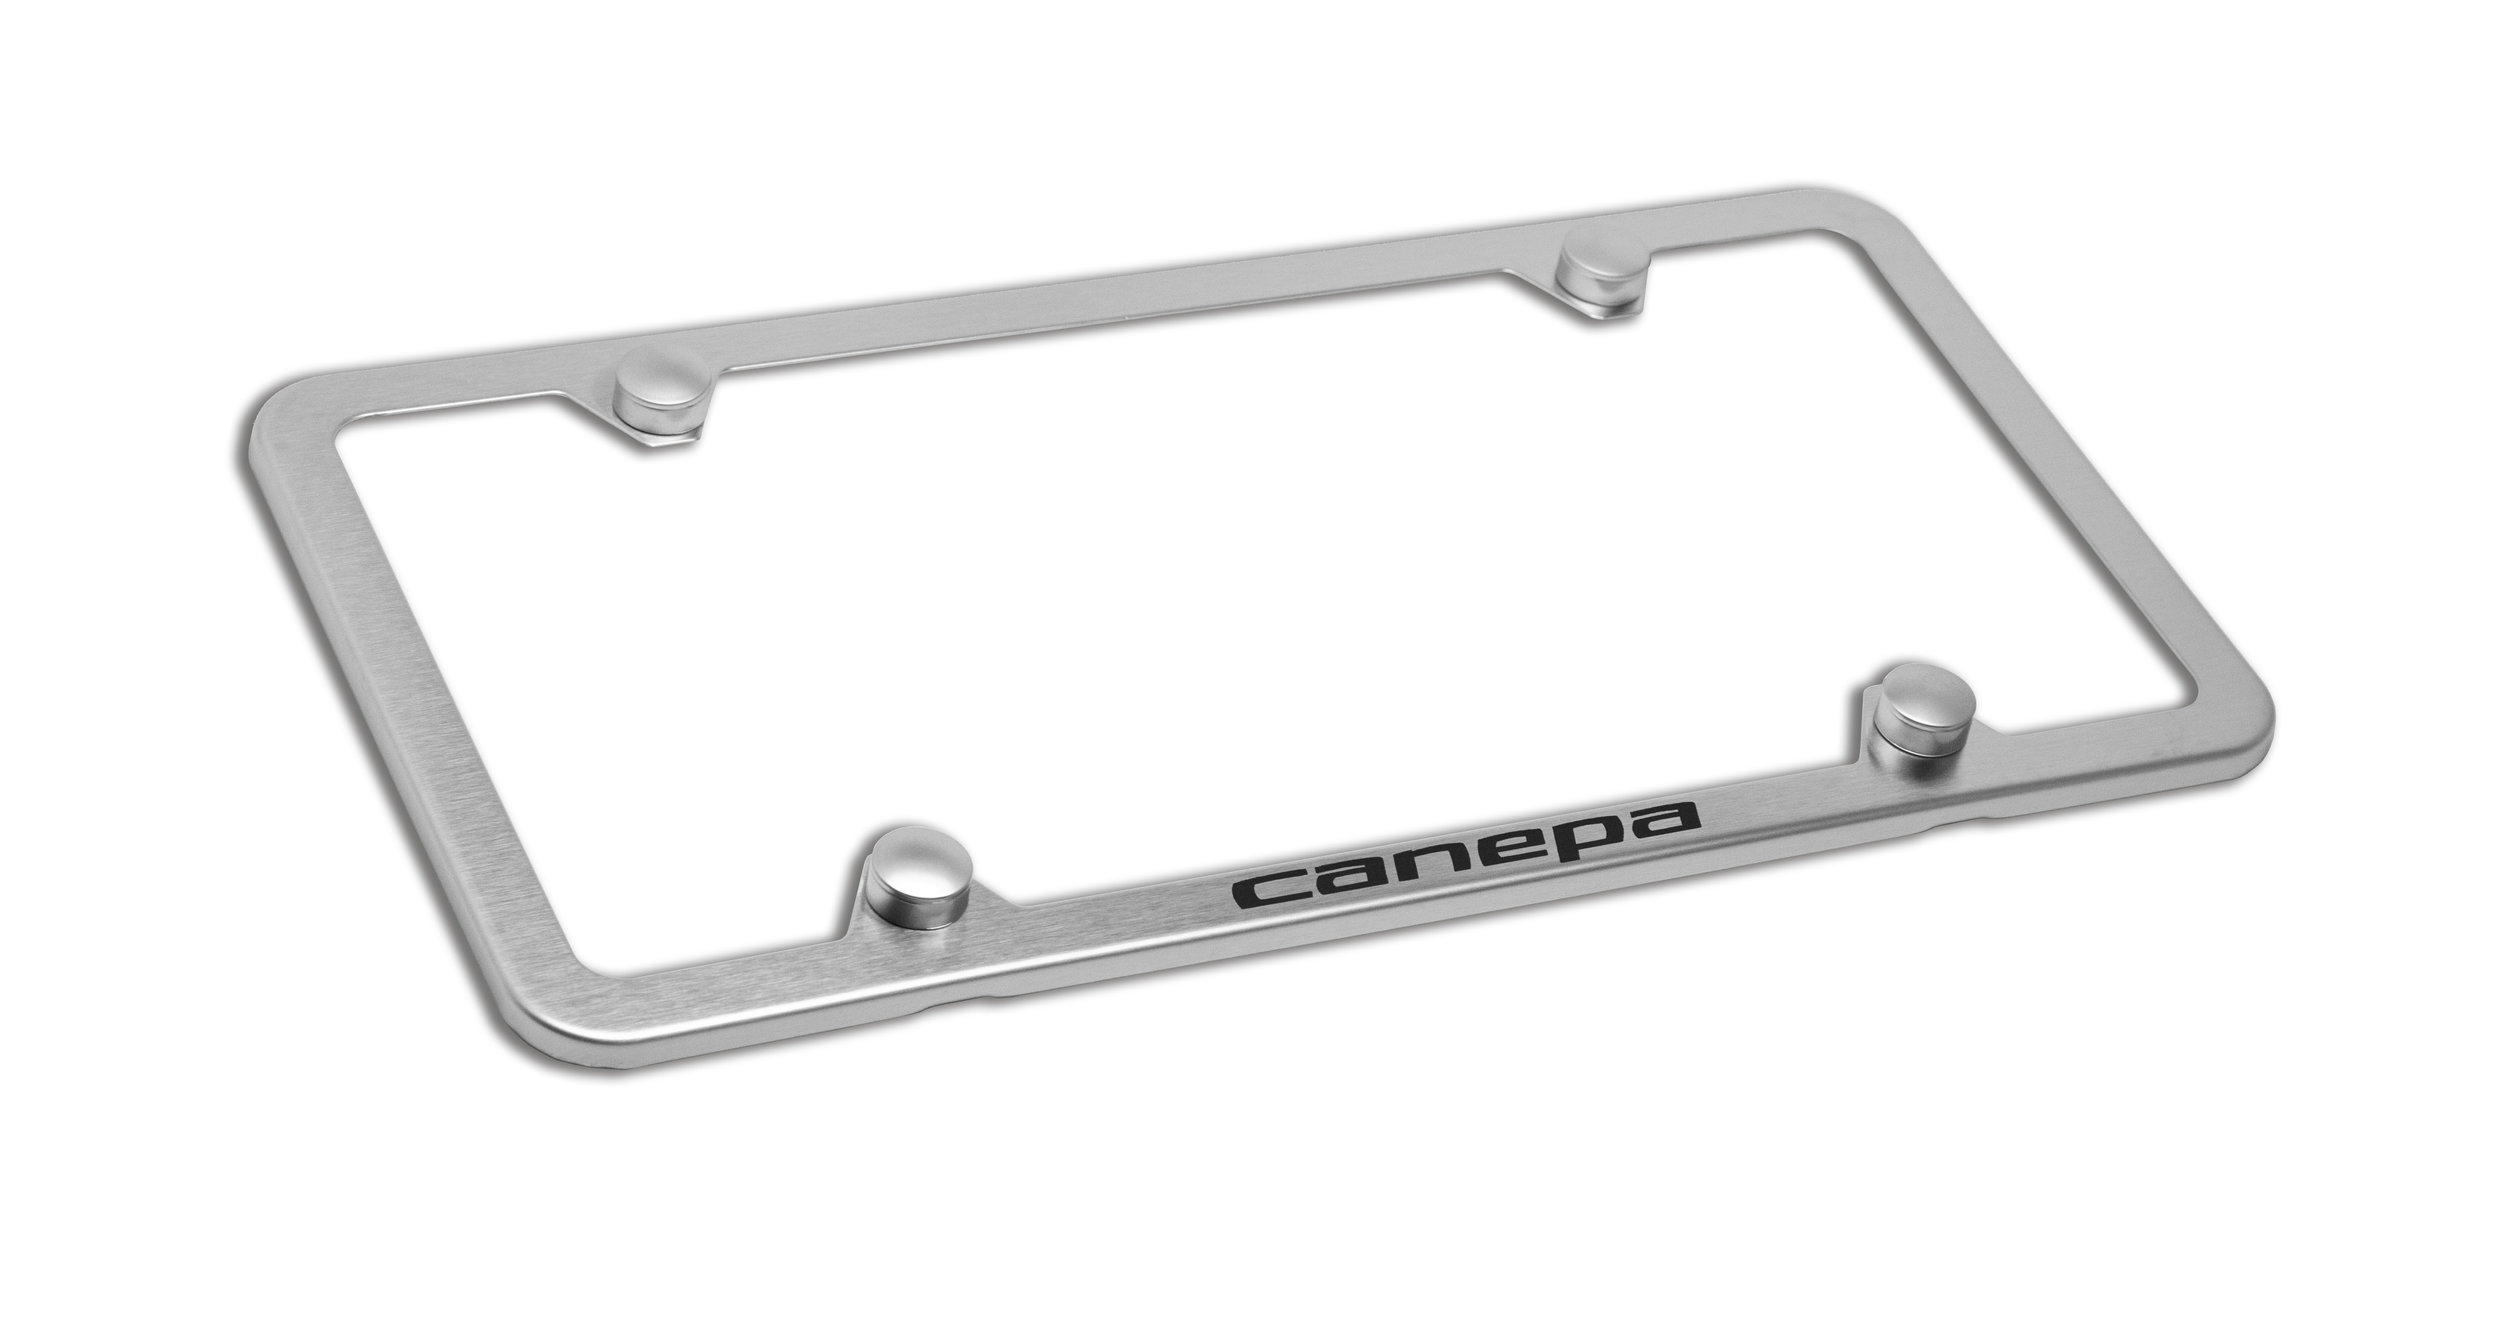 Custom Brushed Canepa Slimline License Plate Frame